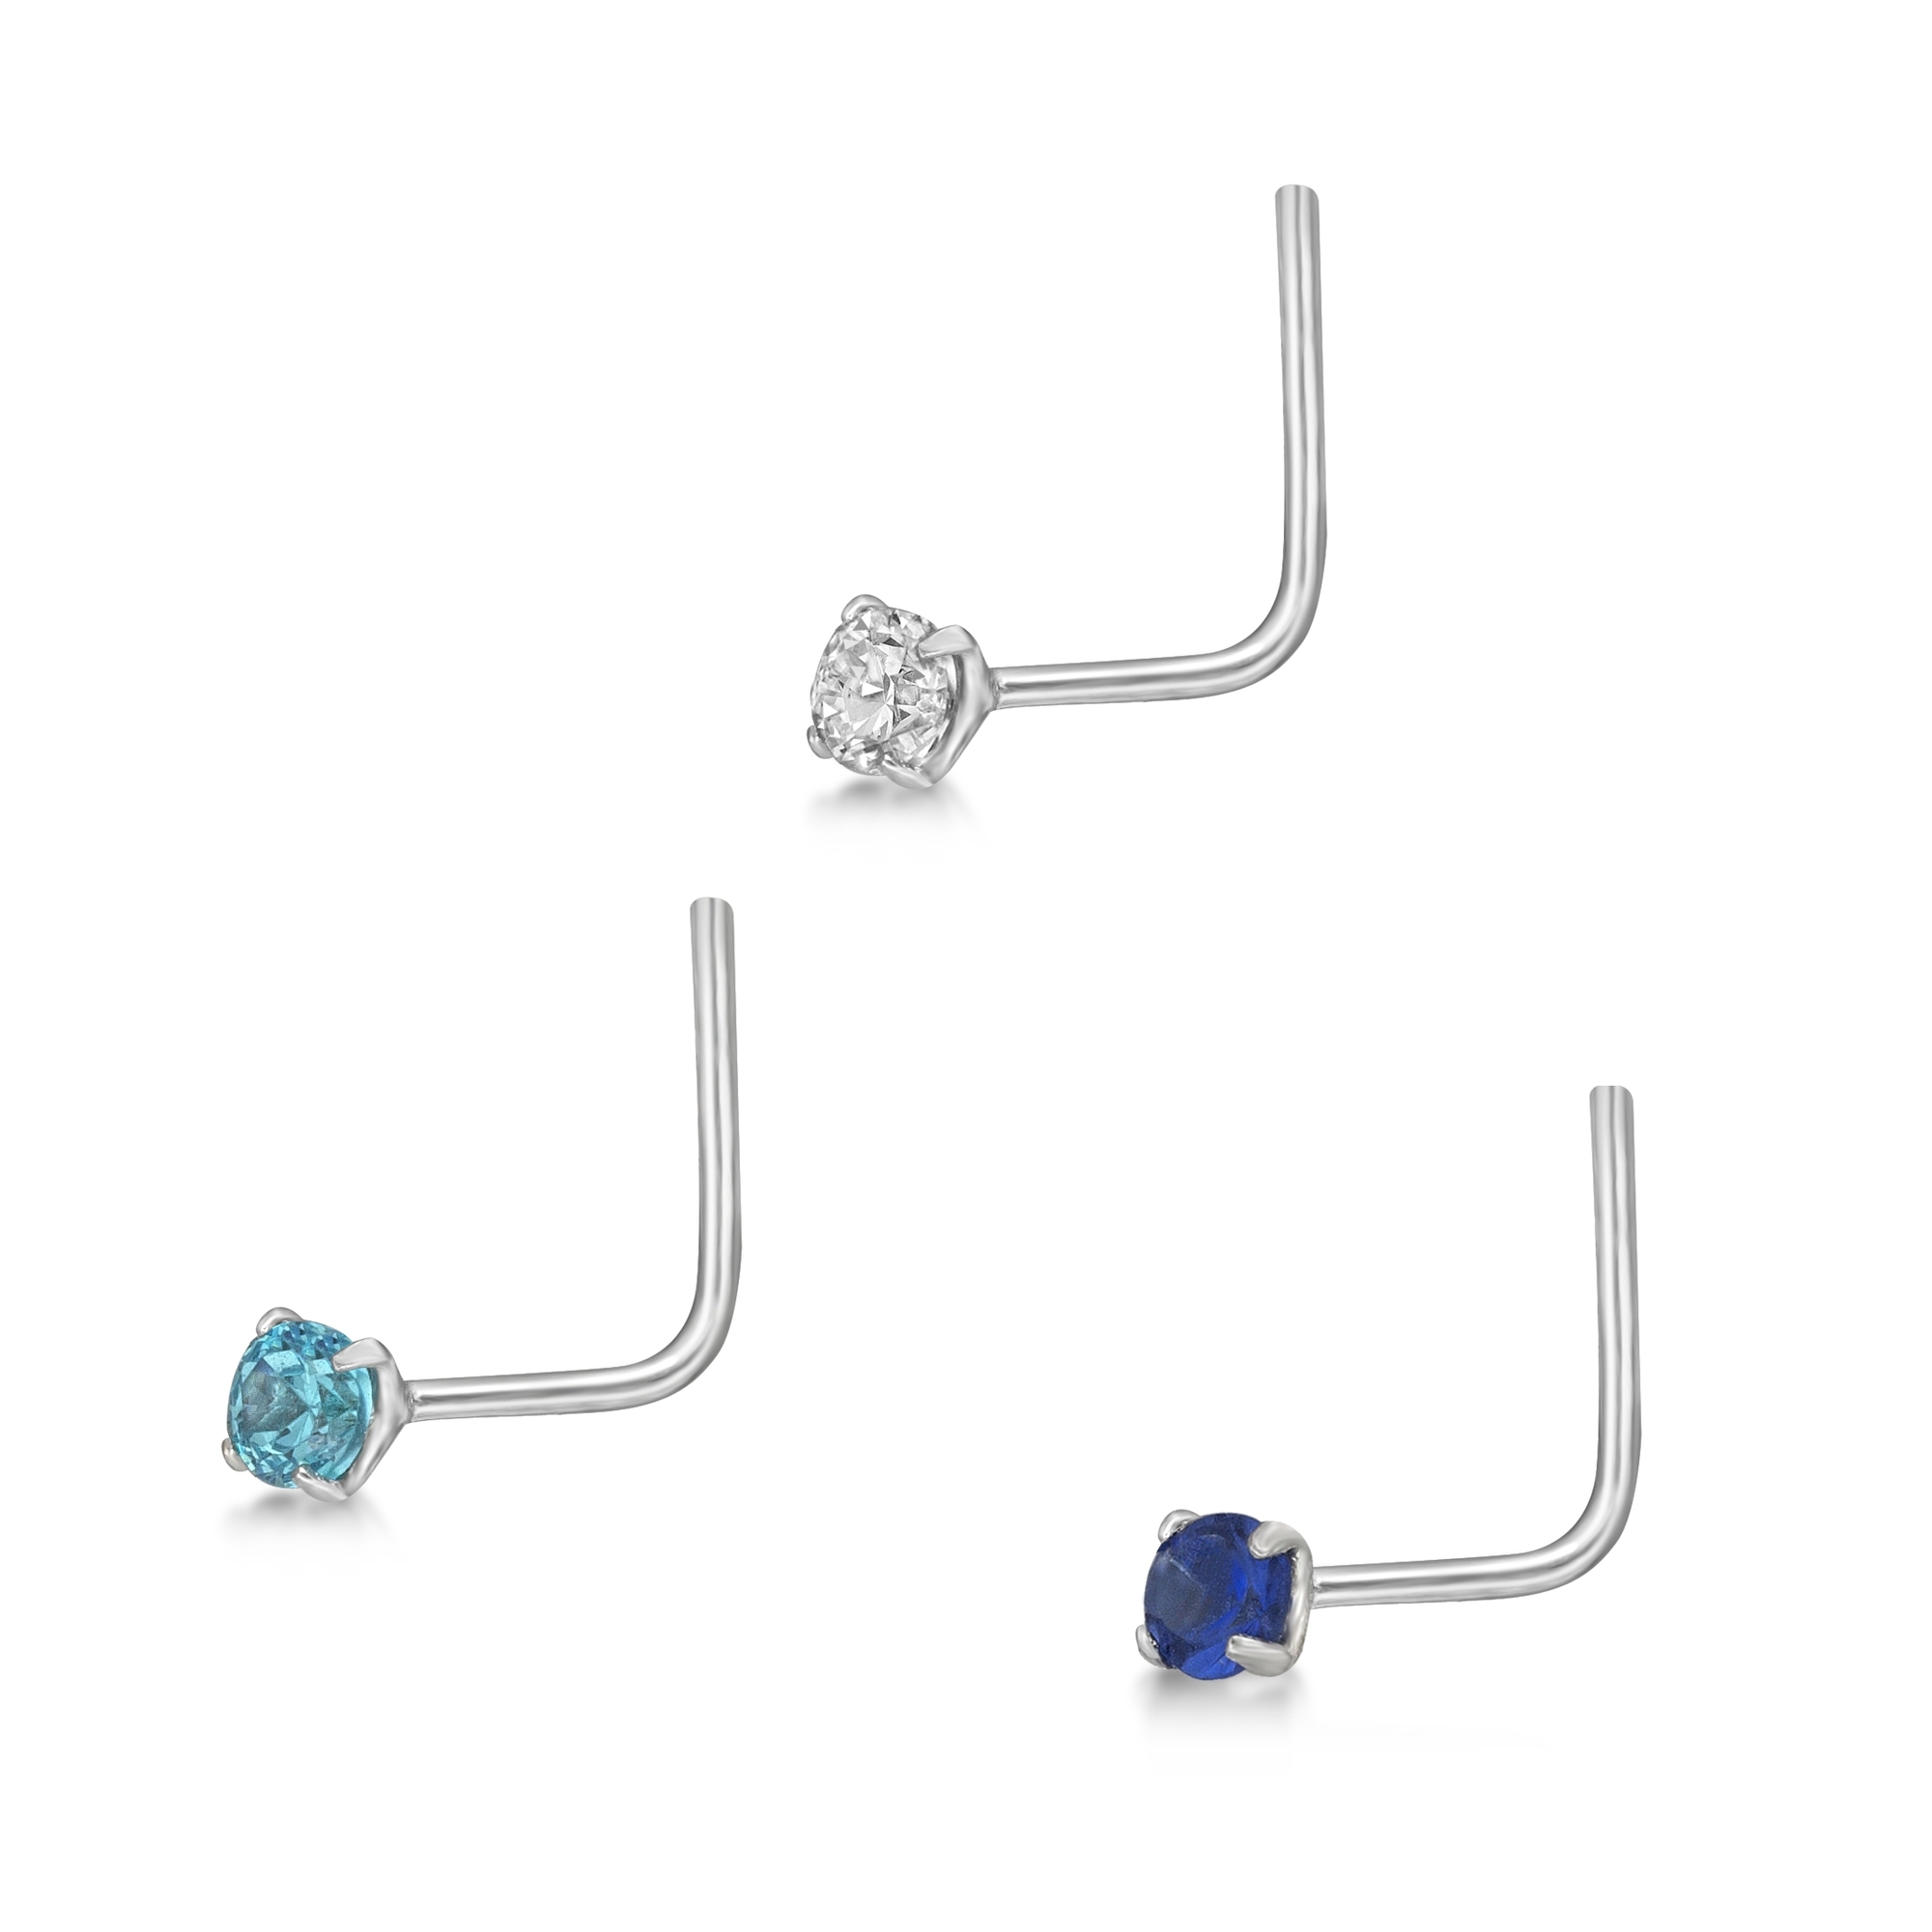 Lavari Jewelers Women's L-Shaped Nose Ring Set, 14K White Gold, 2 MM Blue Cubic Zirconia, 22 Gauge